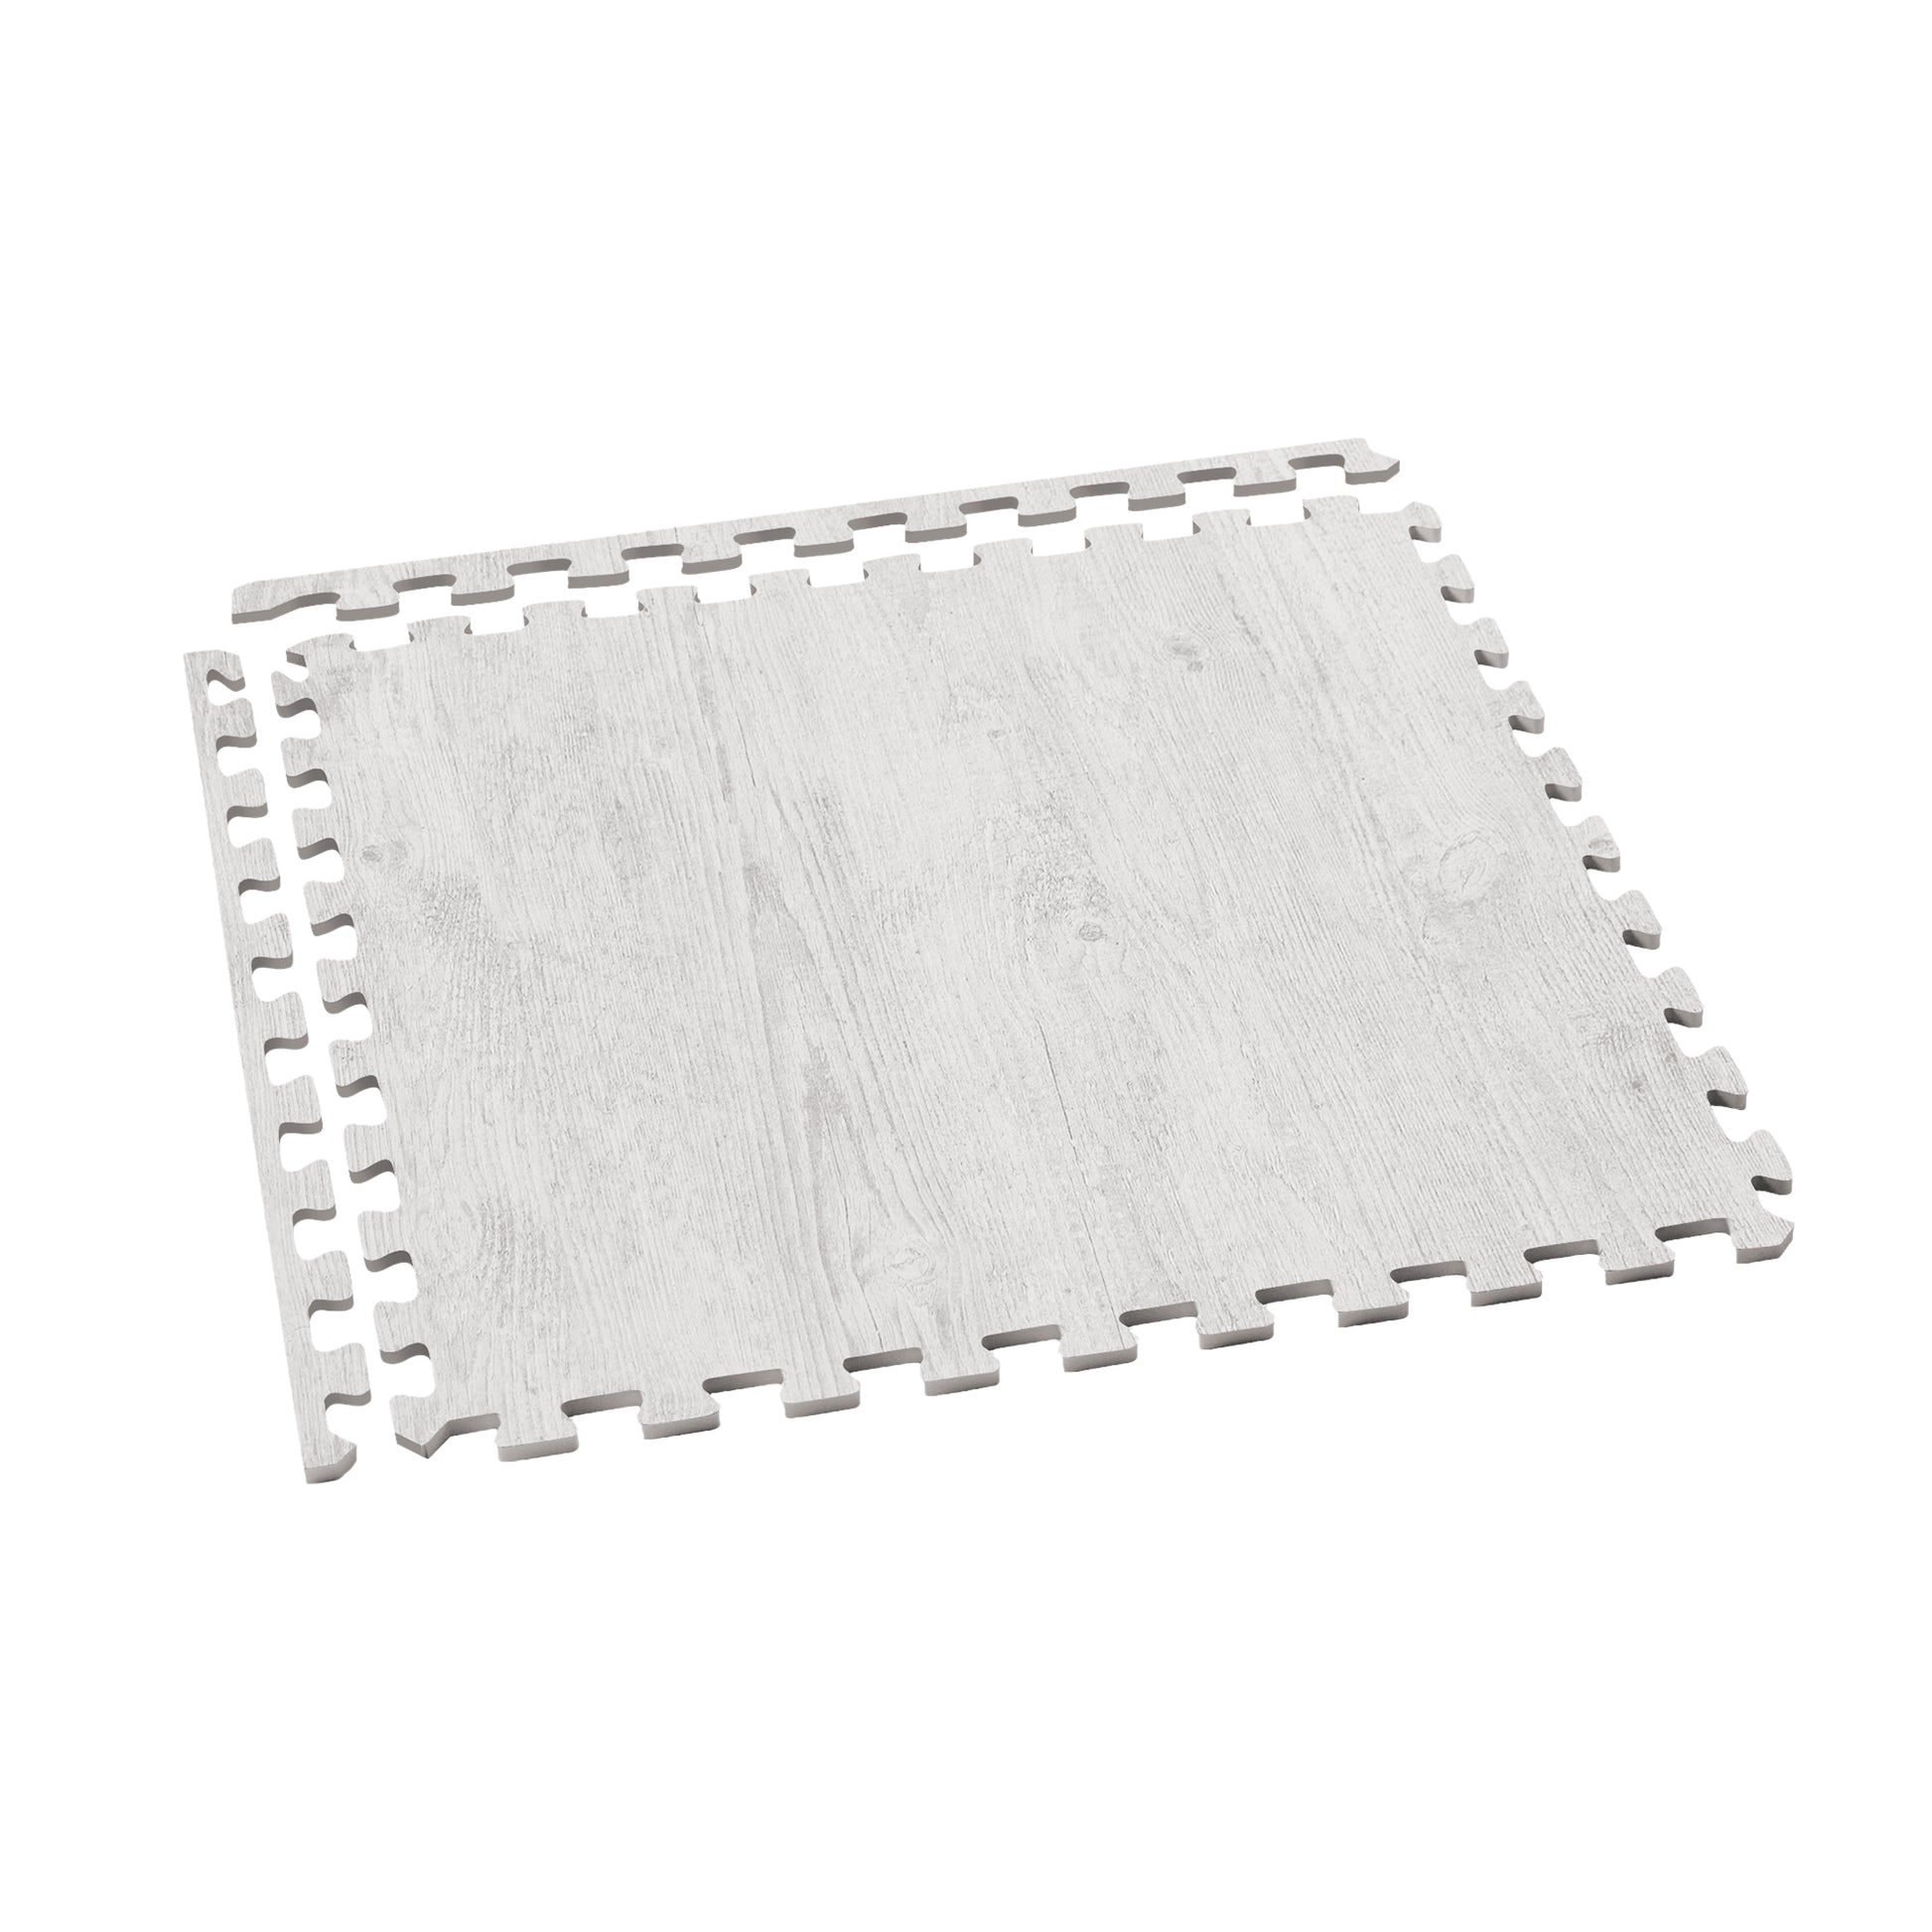 The Original Ribbed Foam Litter Mat – Grey Trellis